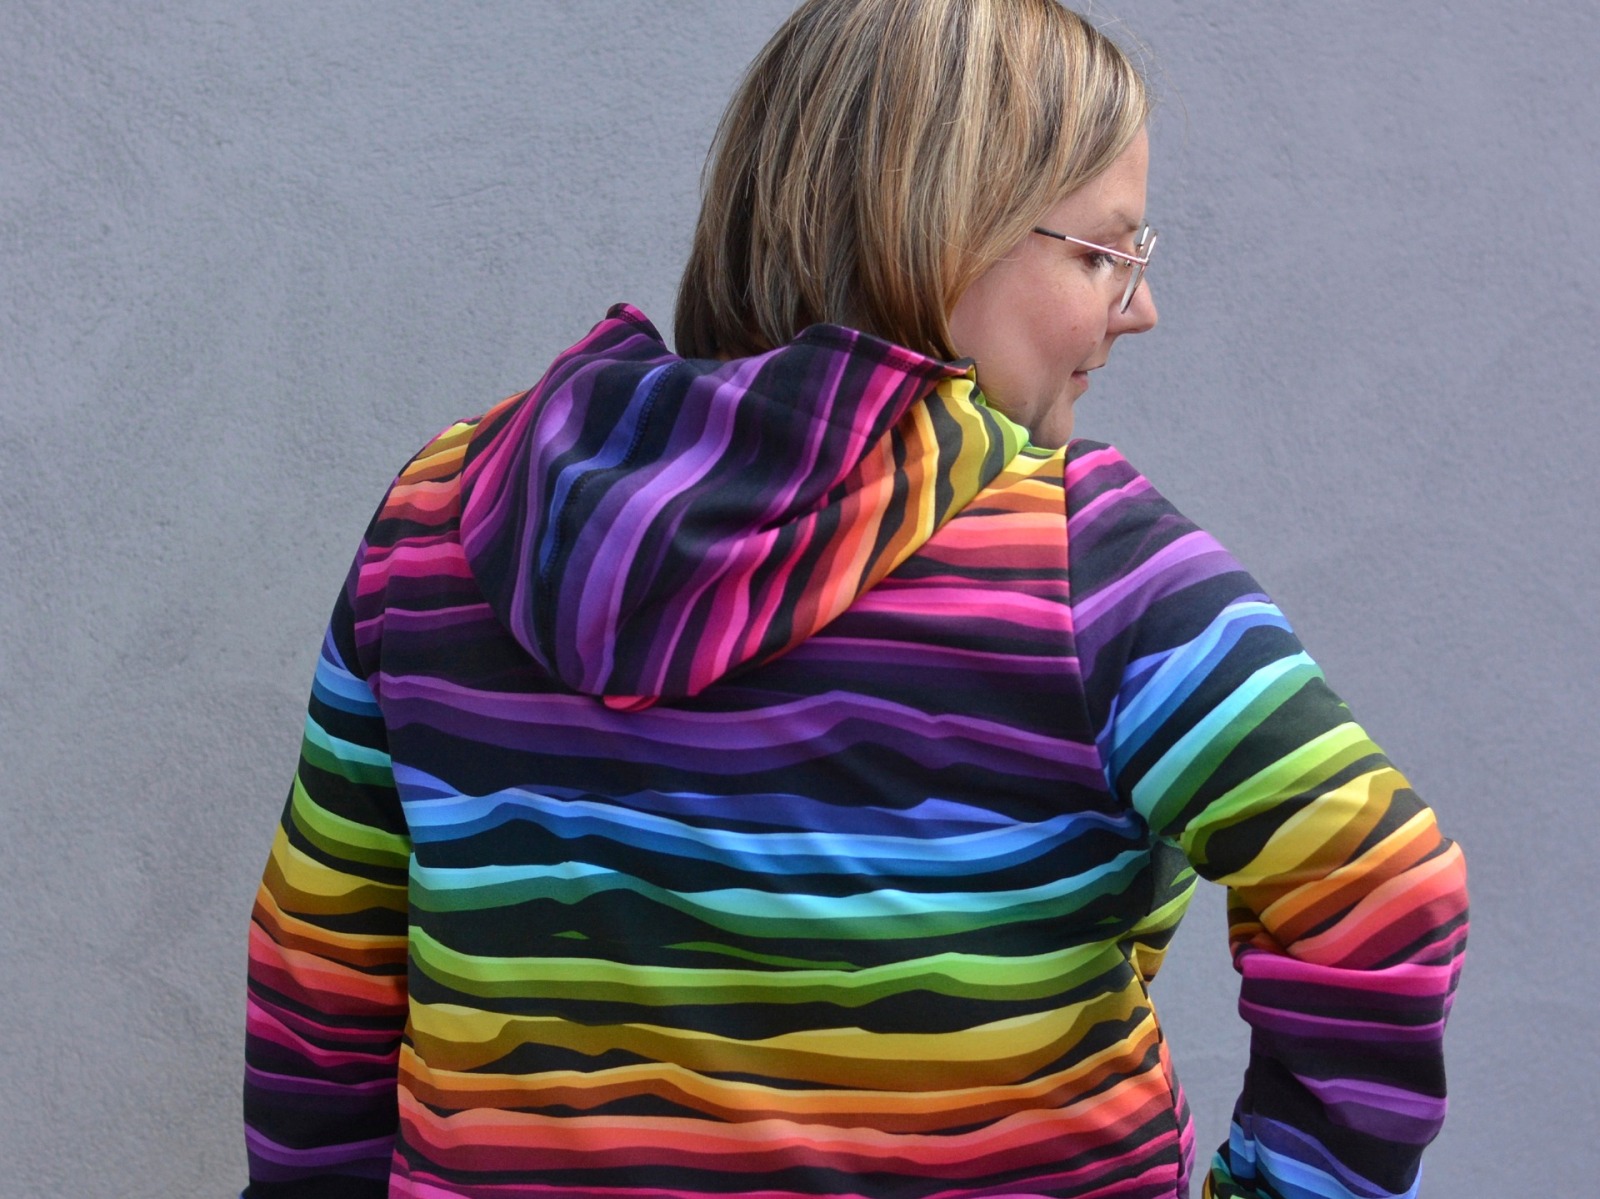 05m Sweat Wavy Stripes by Lycklig Design Regenbogen rainbow bunt 3